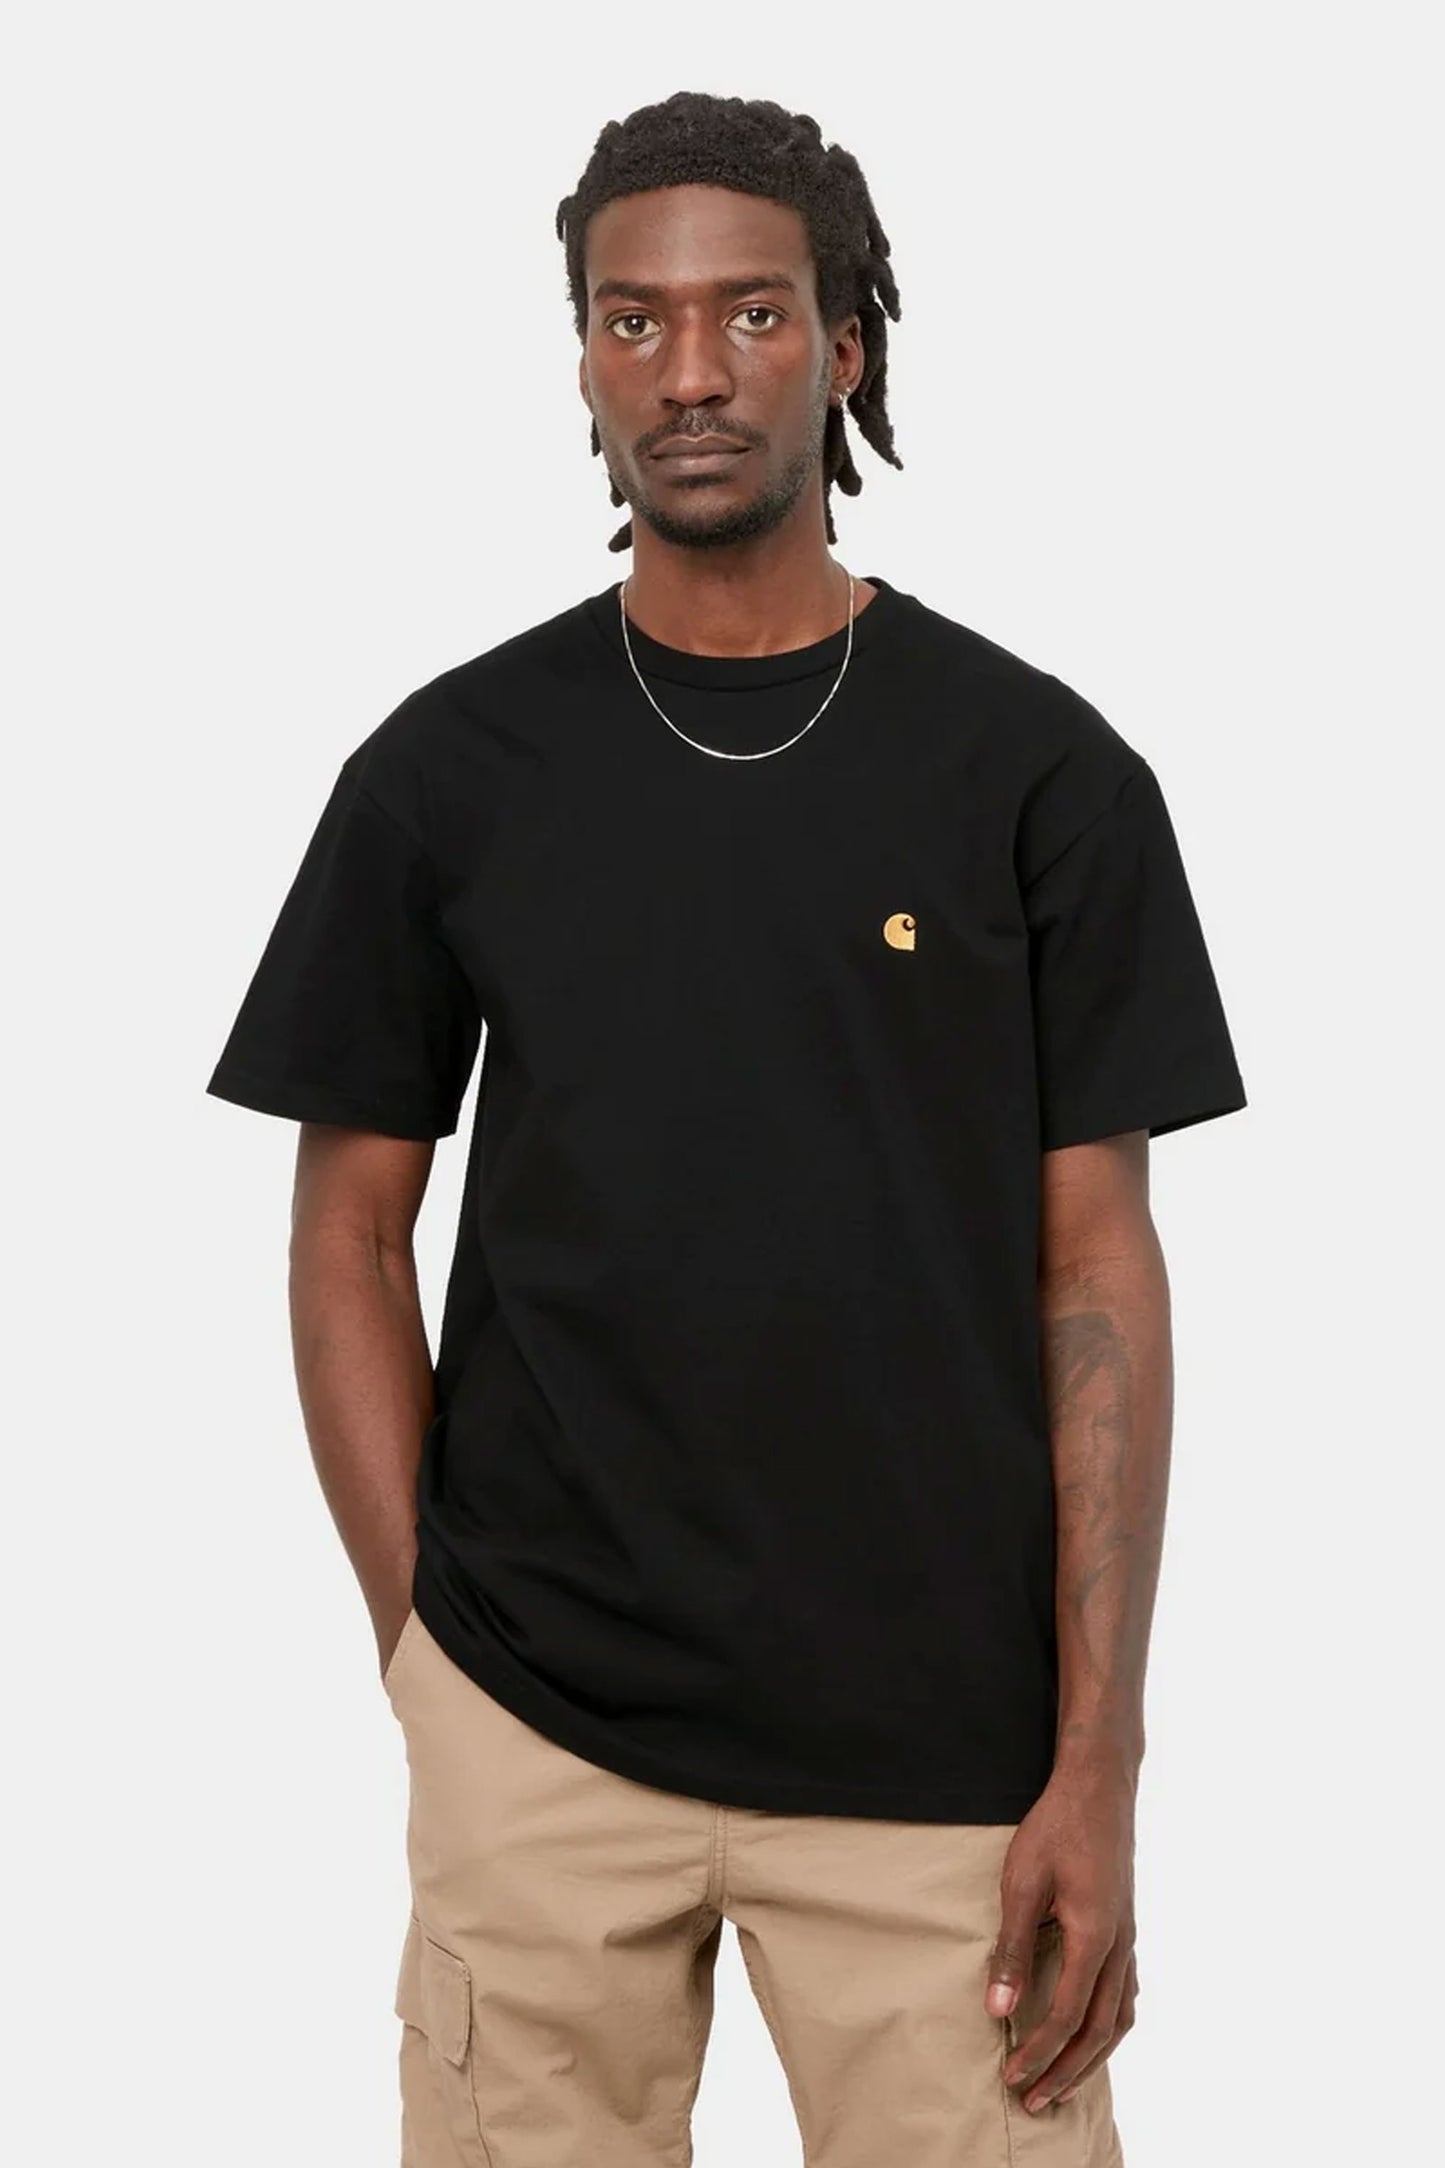 Pukas-Surf-Shop-Carhartt-t-shirt-chase-black